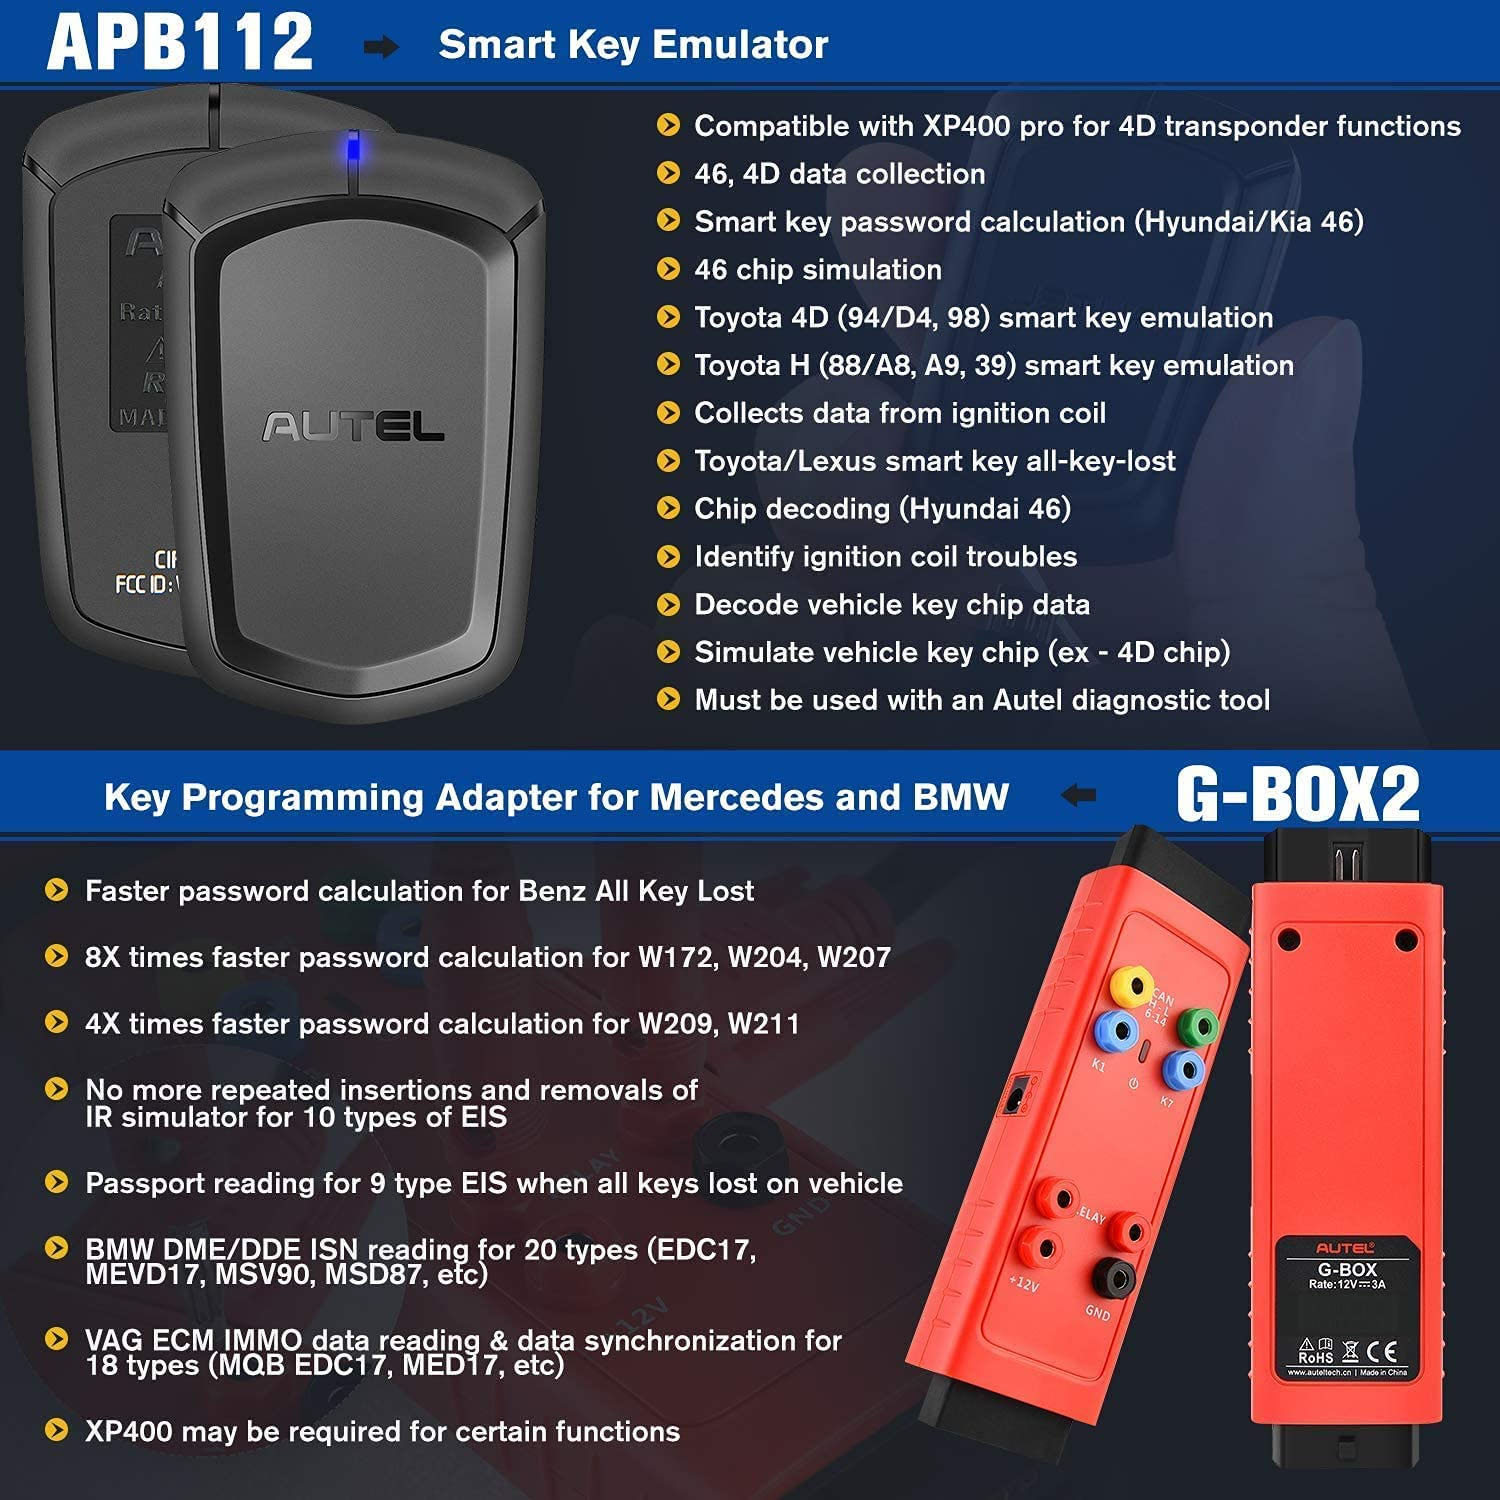 Autel MaxiIM IM608PRO with XP400 Pro Plus IMKPA Accessories